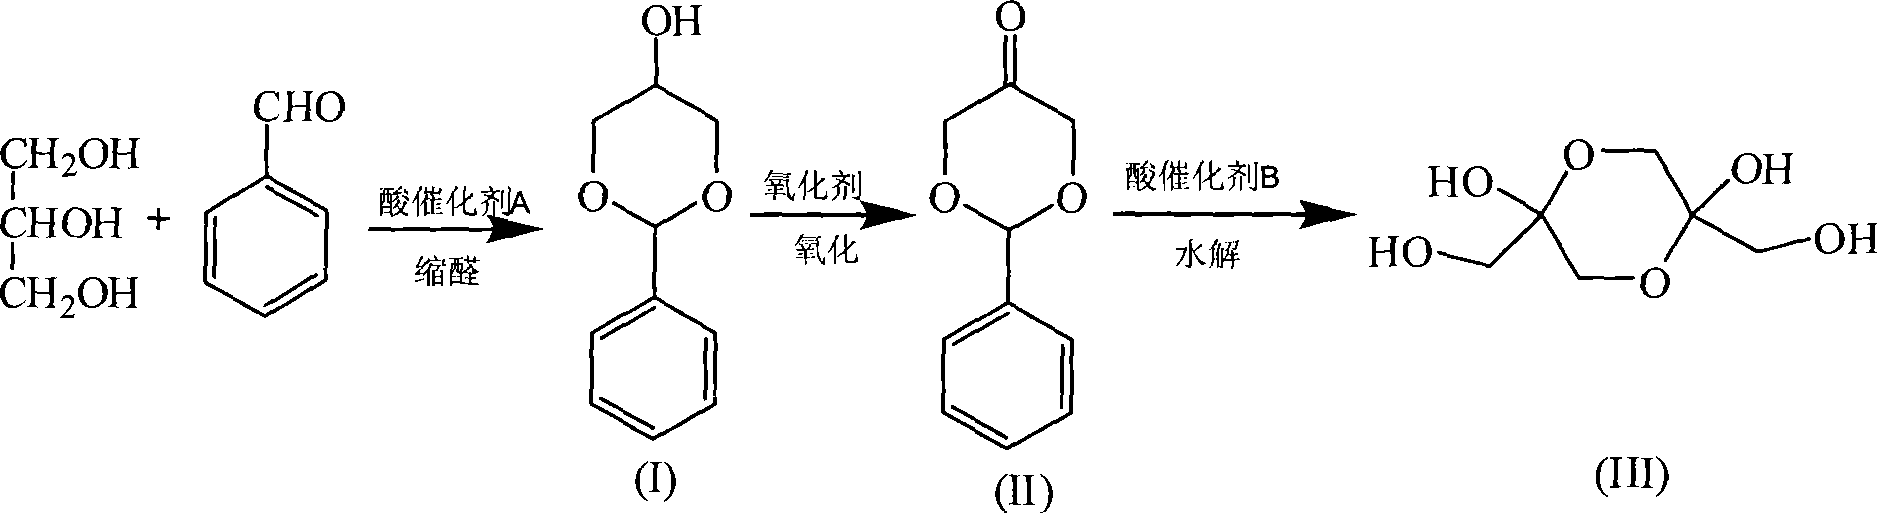 Novel method for preparing 1,3-dihydroxy acetone from glycerol